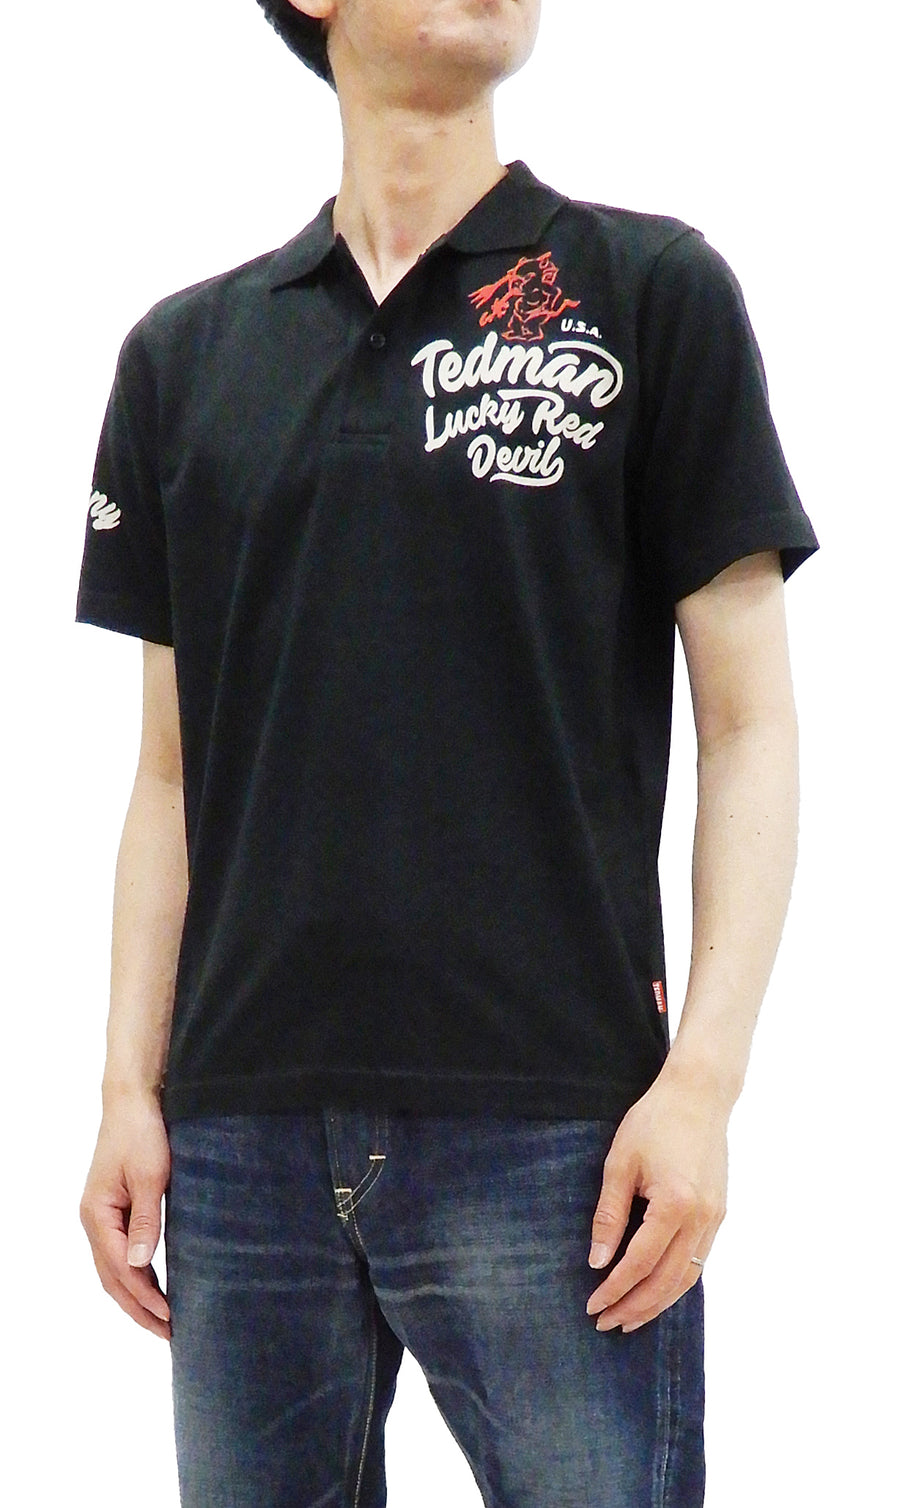 Tedman Polo Shirt Men's Short Sleeve Cotton Jersey Graphic Polo Shirt TMSP-600 Black